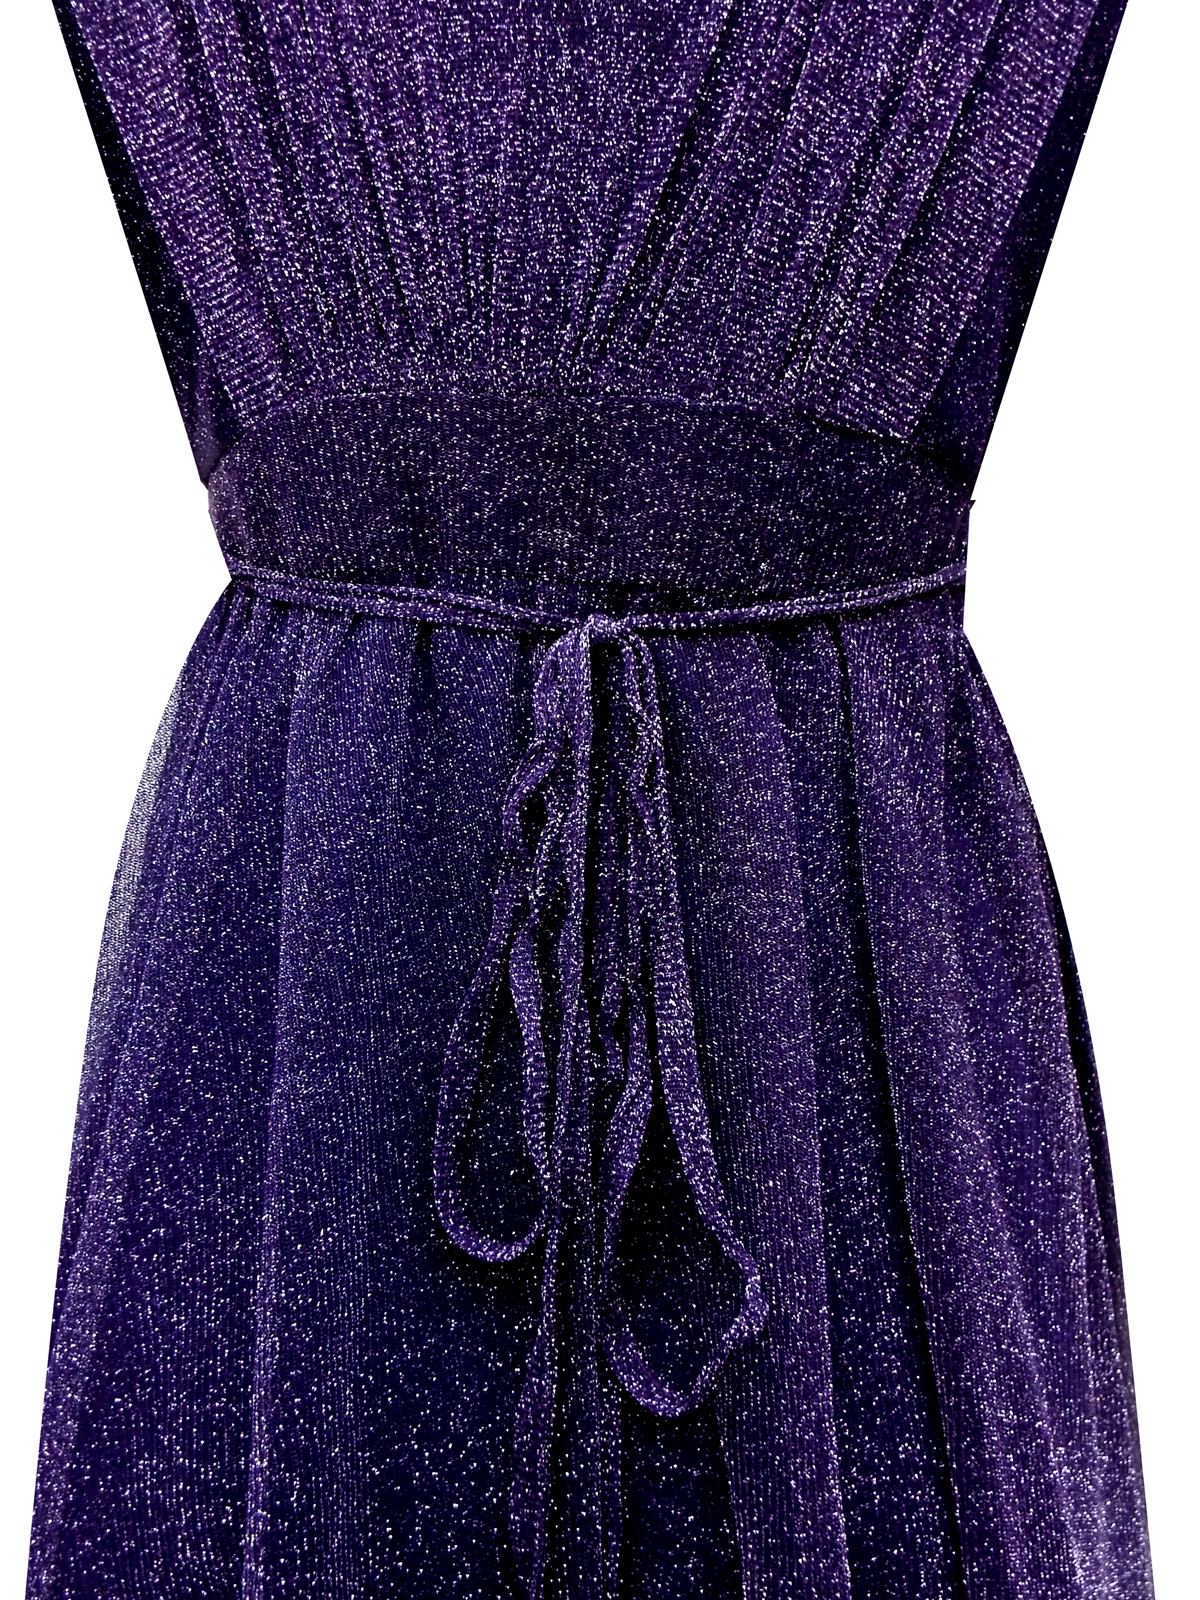 purple shimmer dress